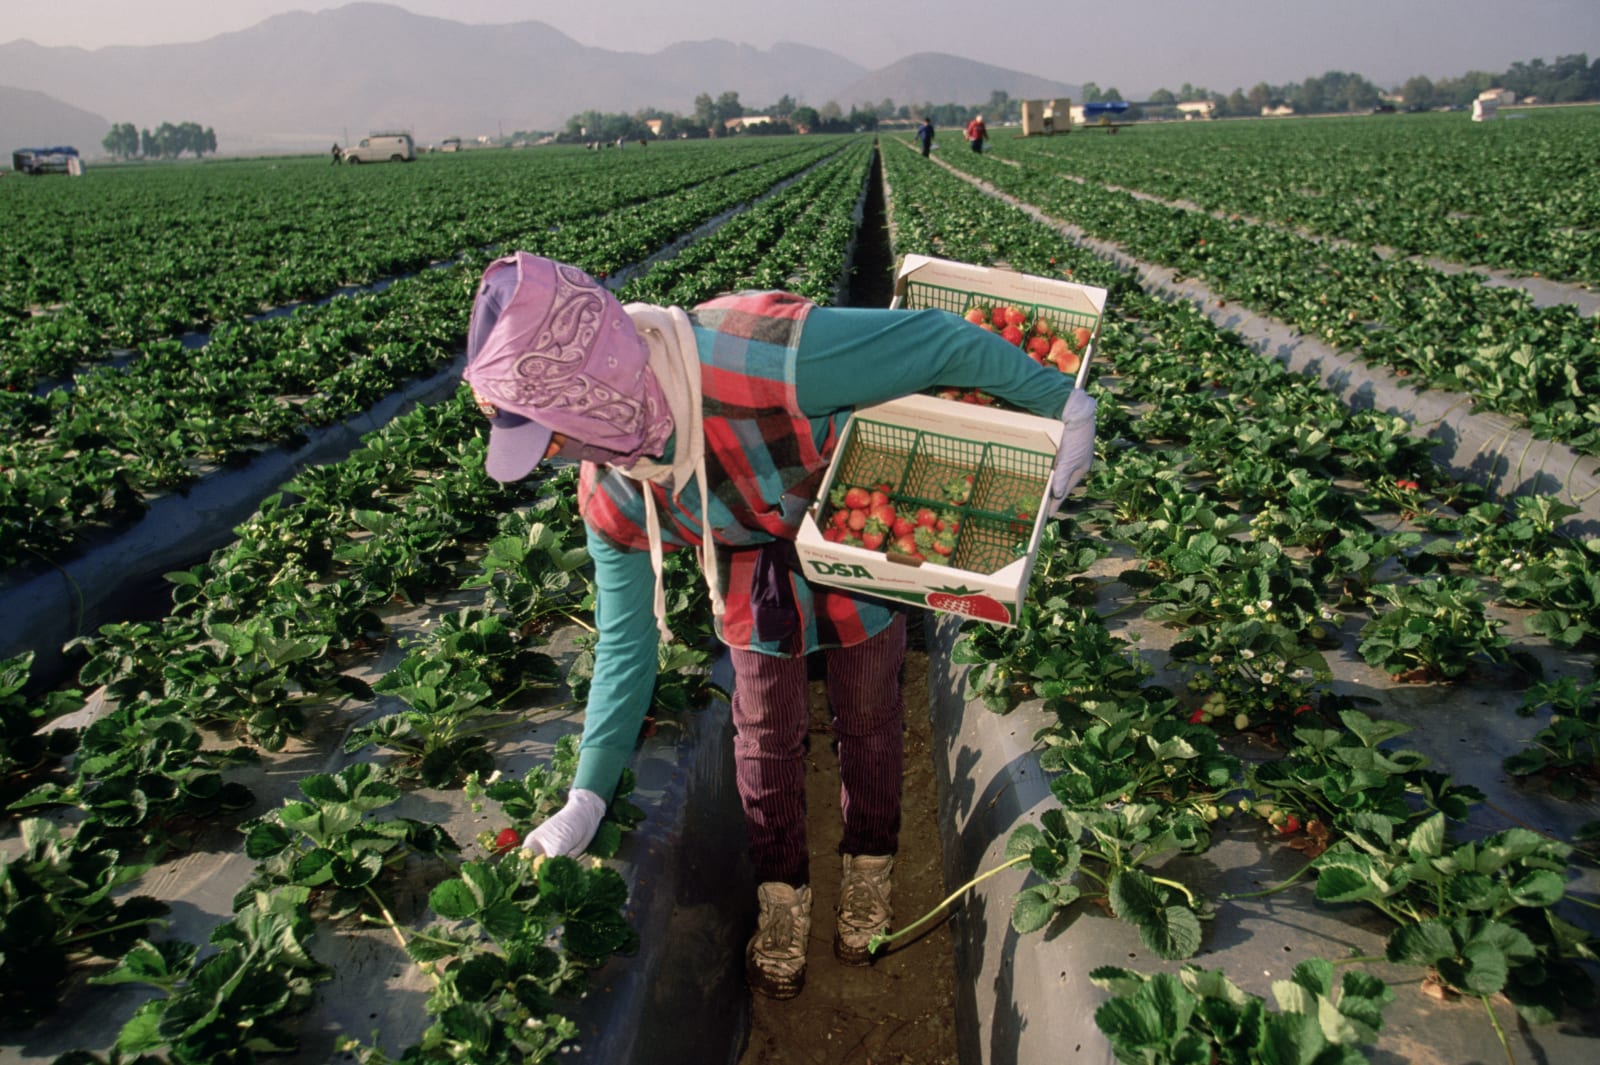 Migrant Worker Harvesting California Strawberries